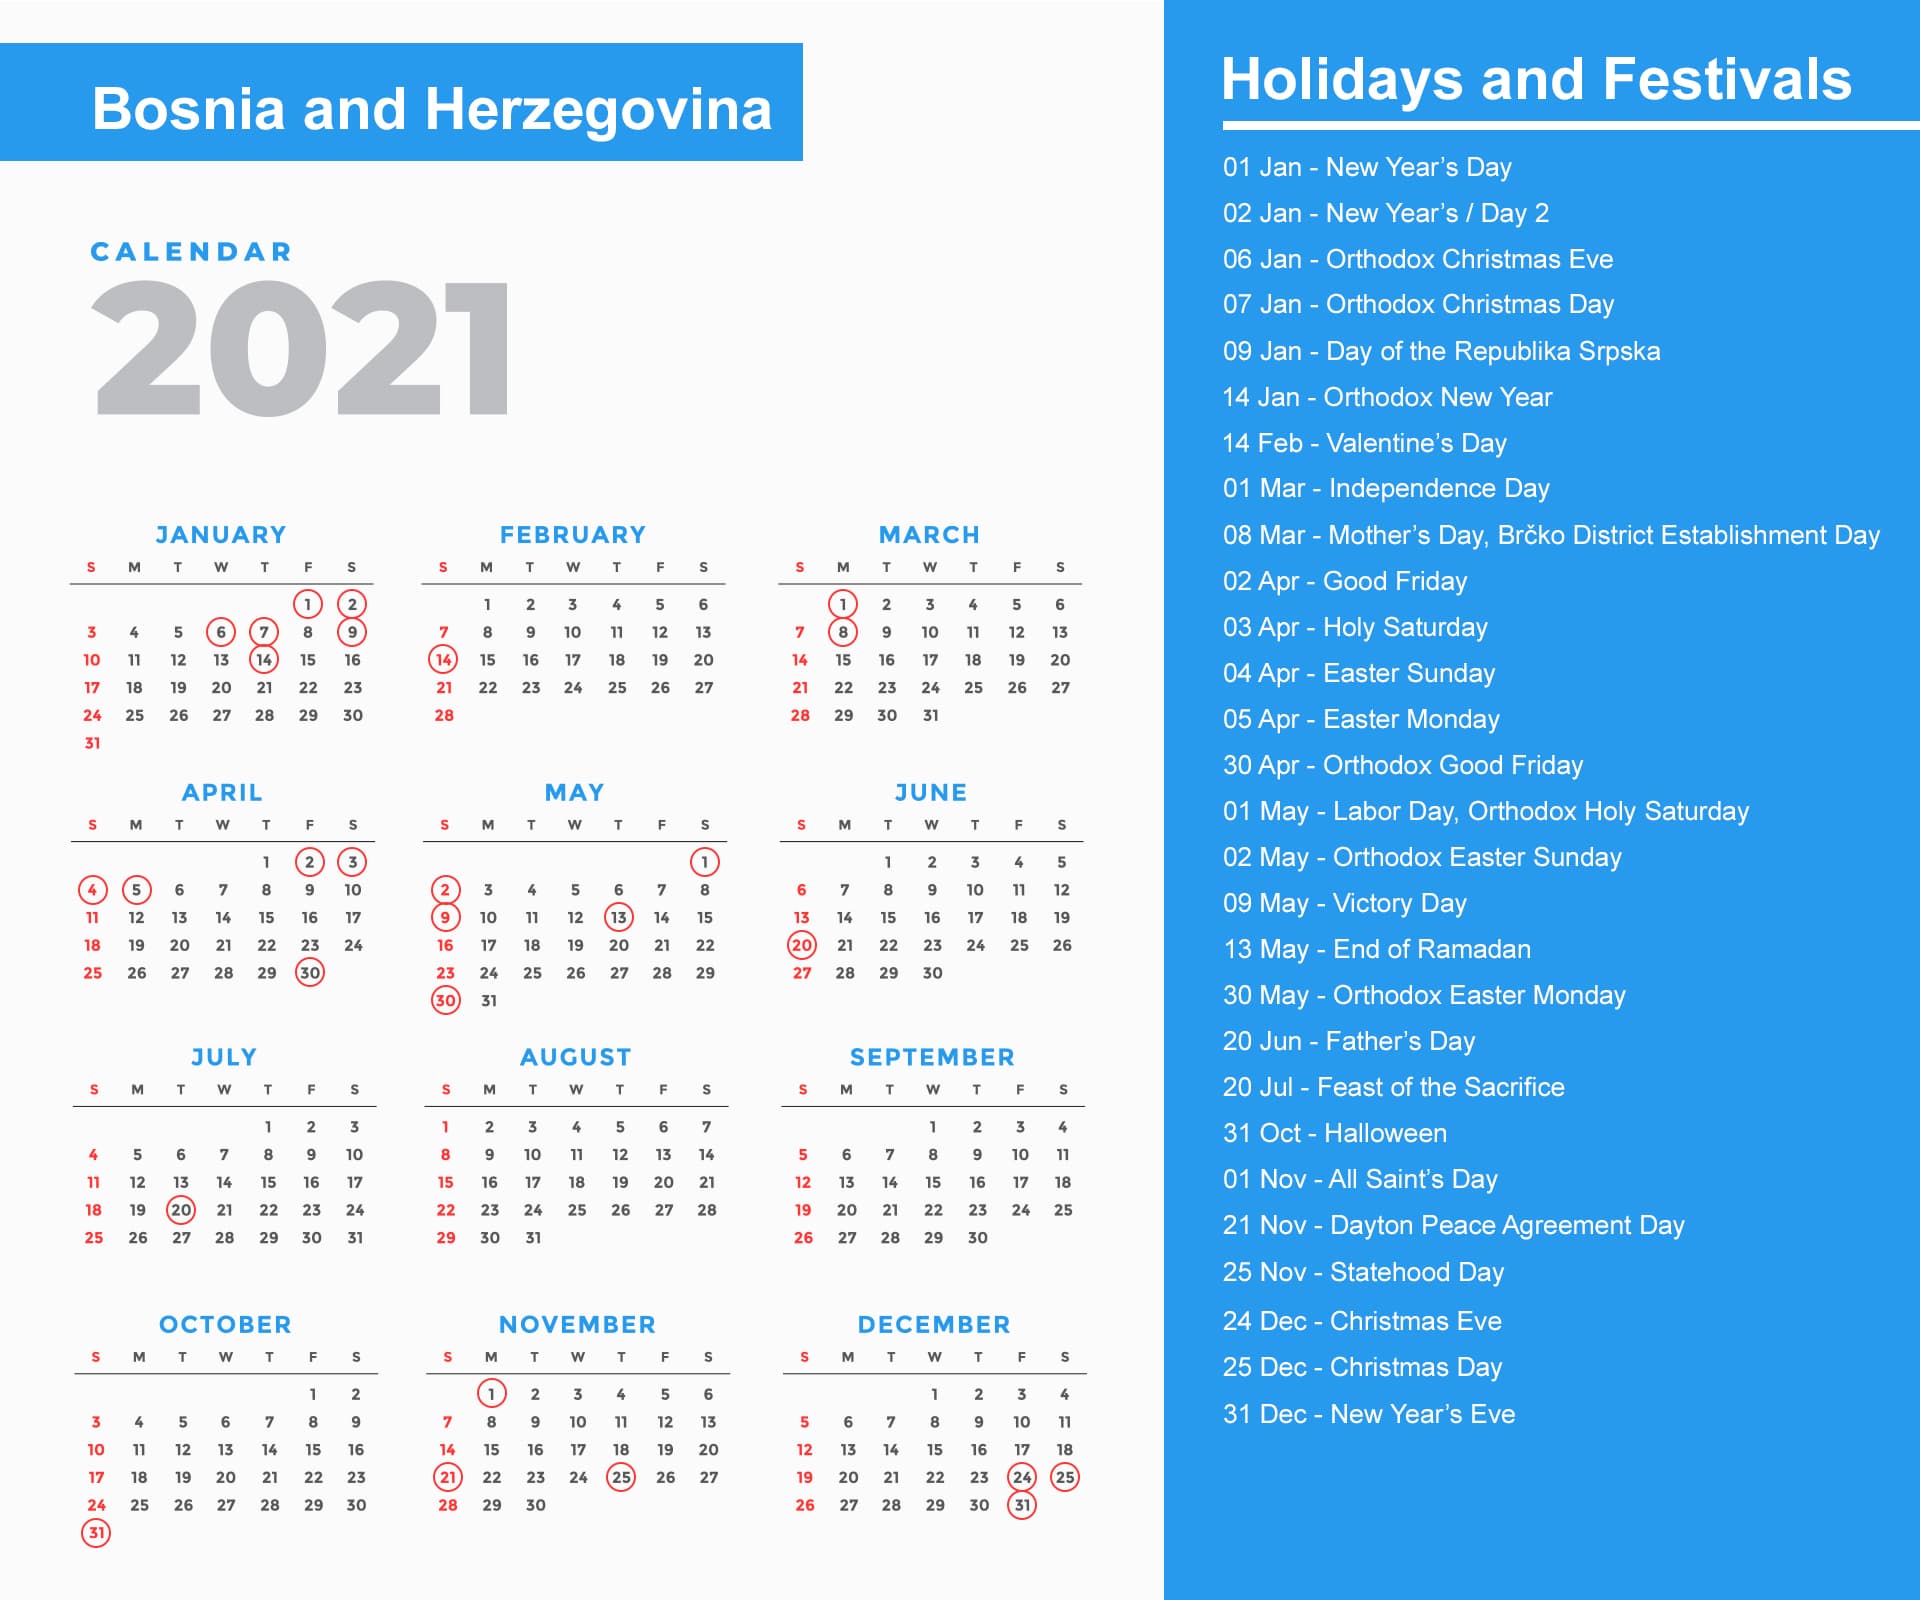 Bosnia and Herzegovina Holidays Calendar 2021